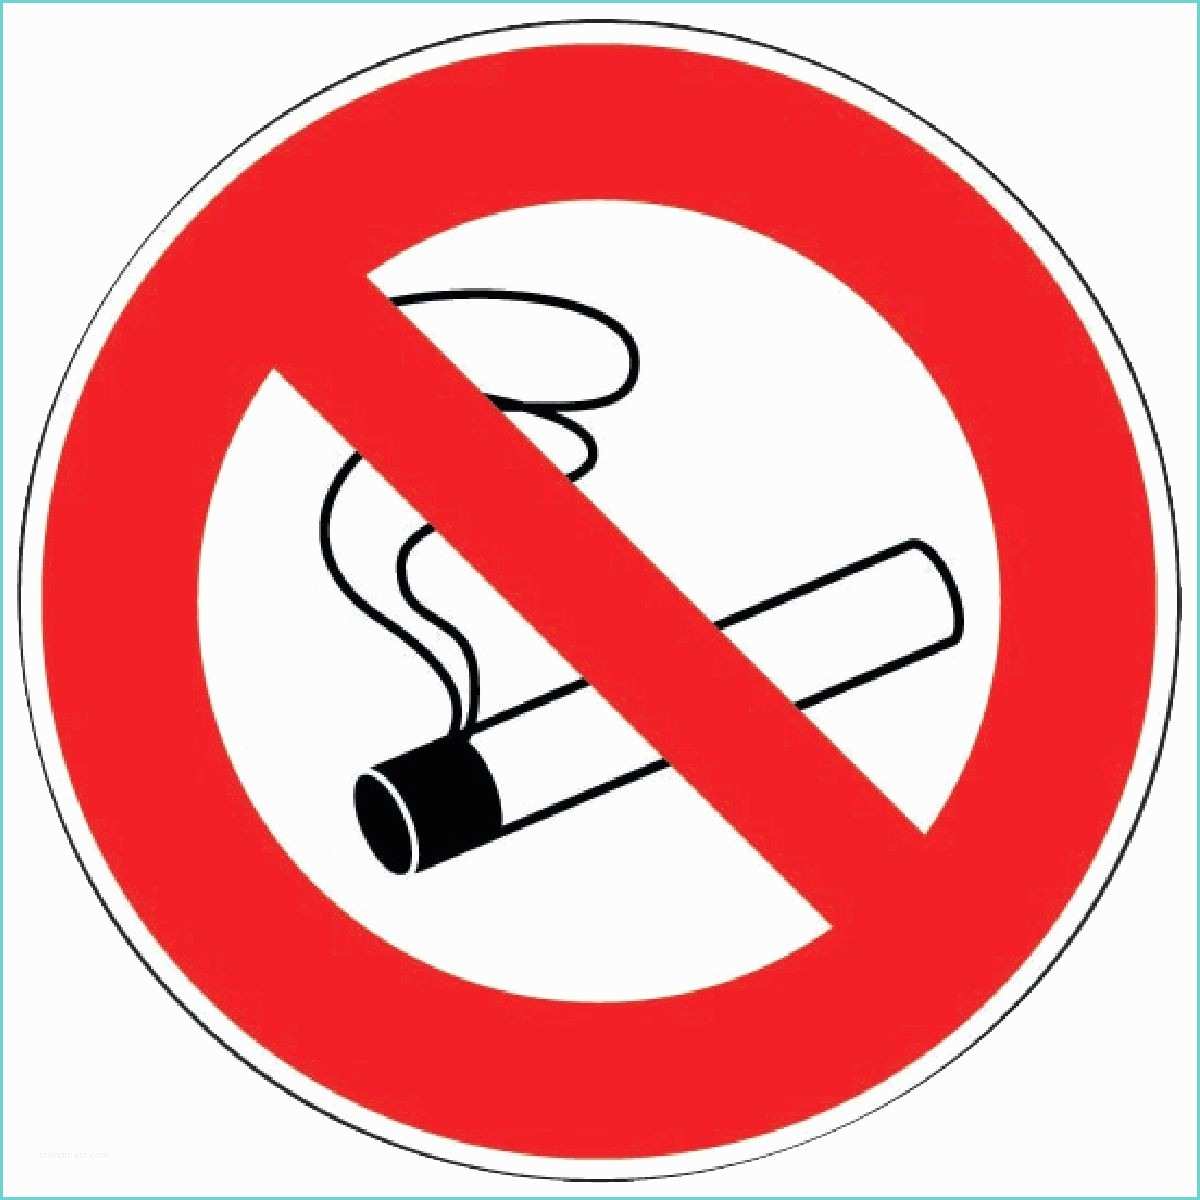 Image Interdiction De Fumer Logo Interdiction De Fumer Gratuit à Imprimer